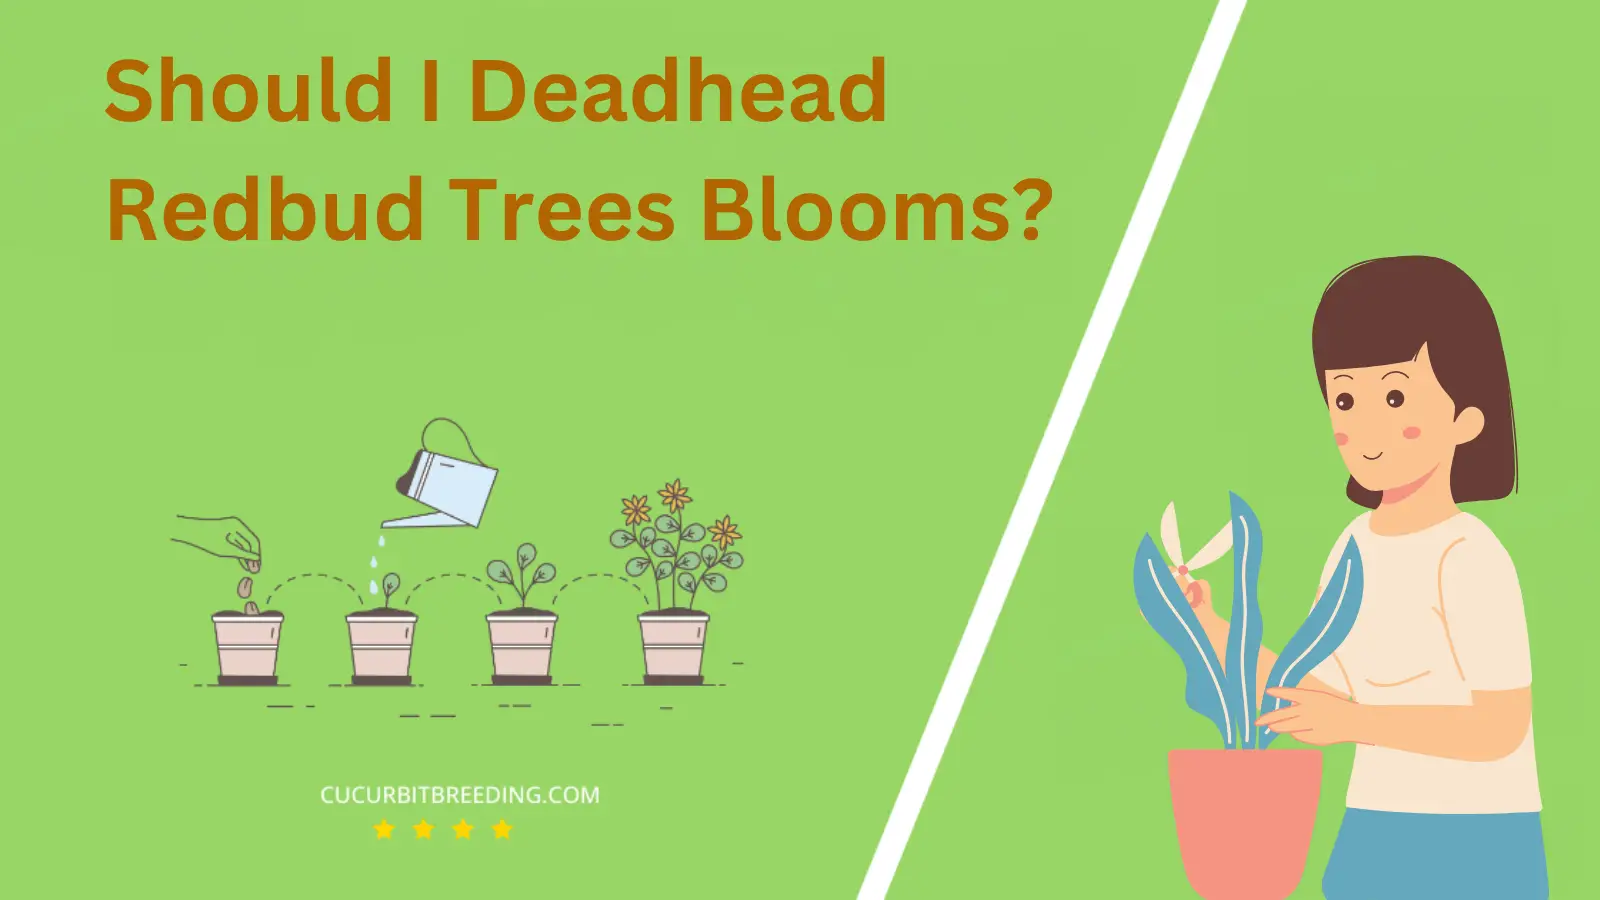 Should I Deadhead Redbud Trees Blooms?